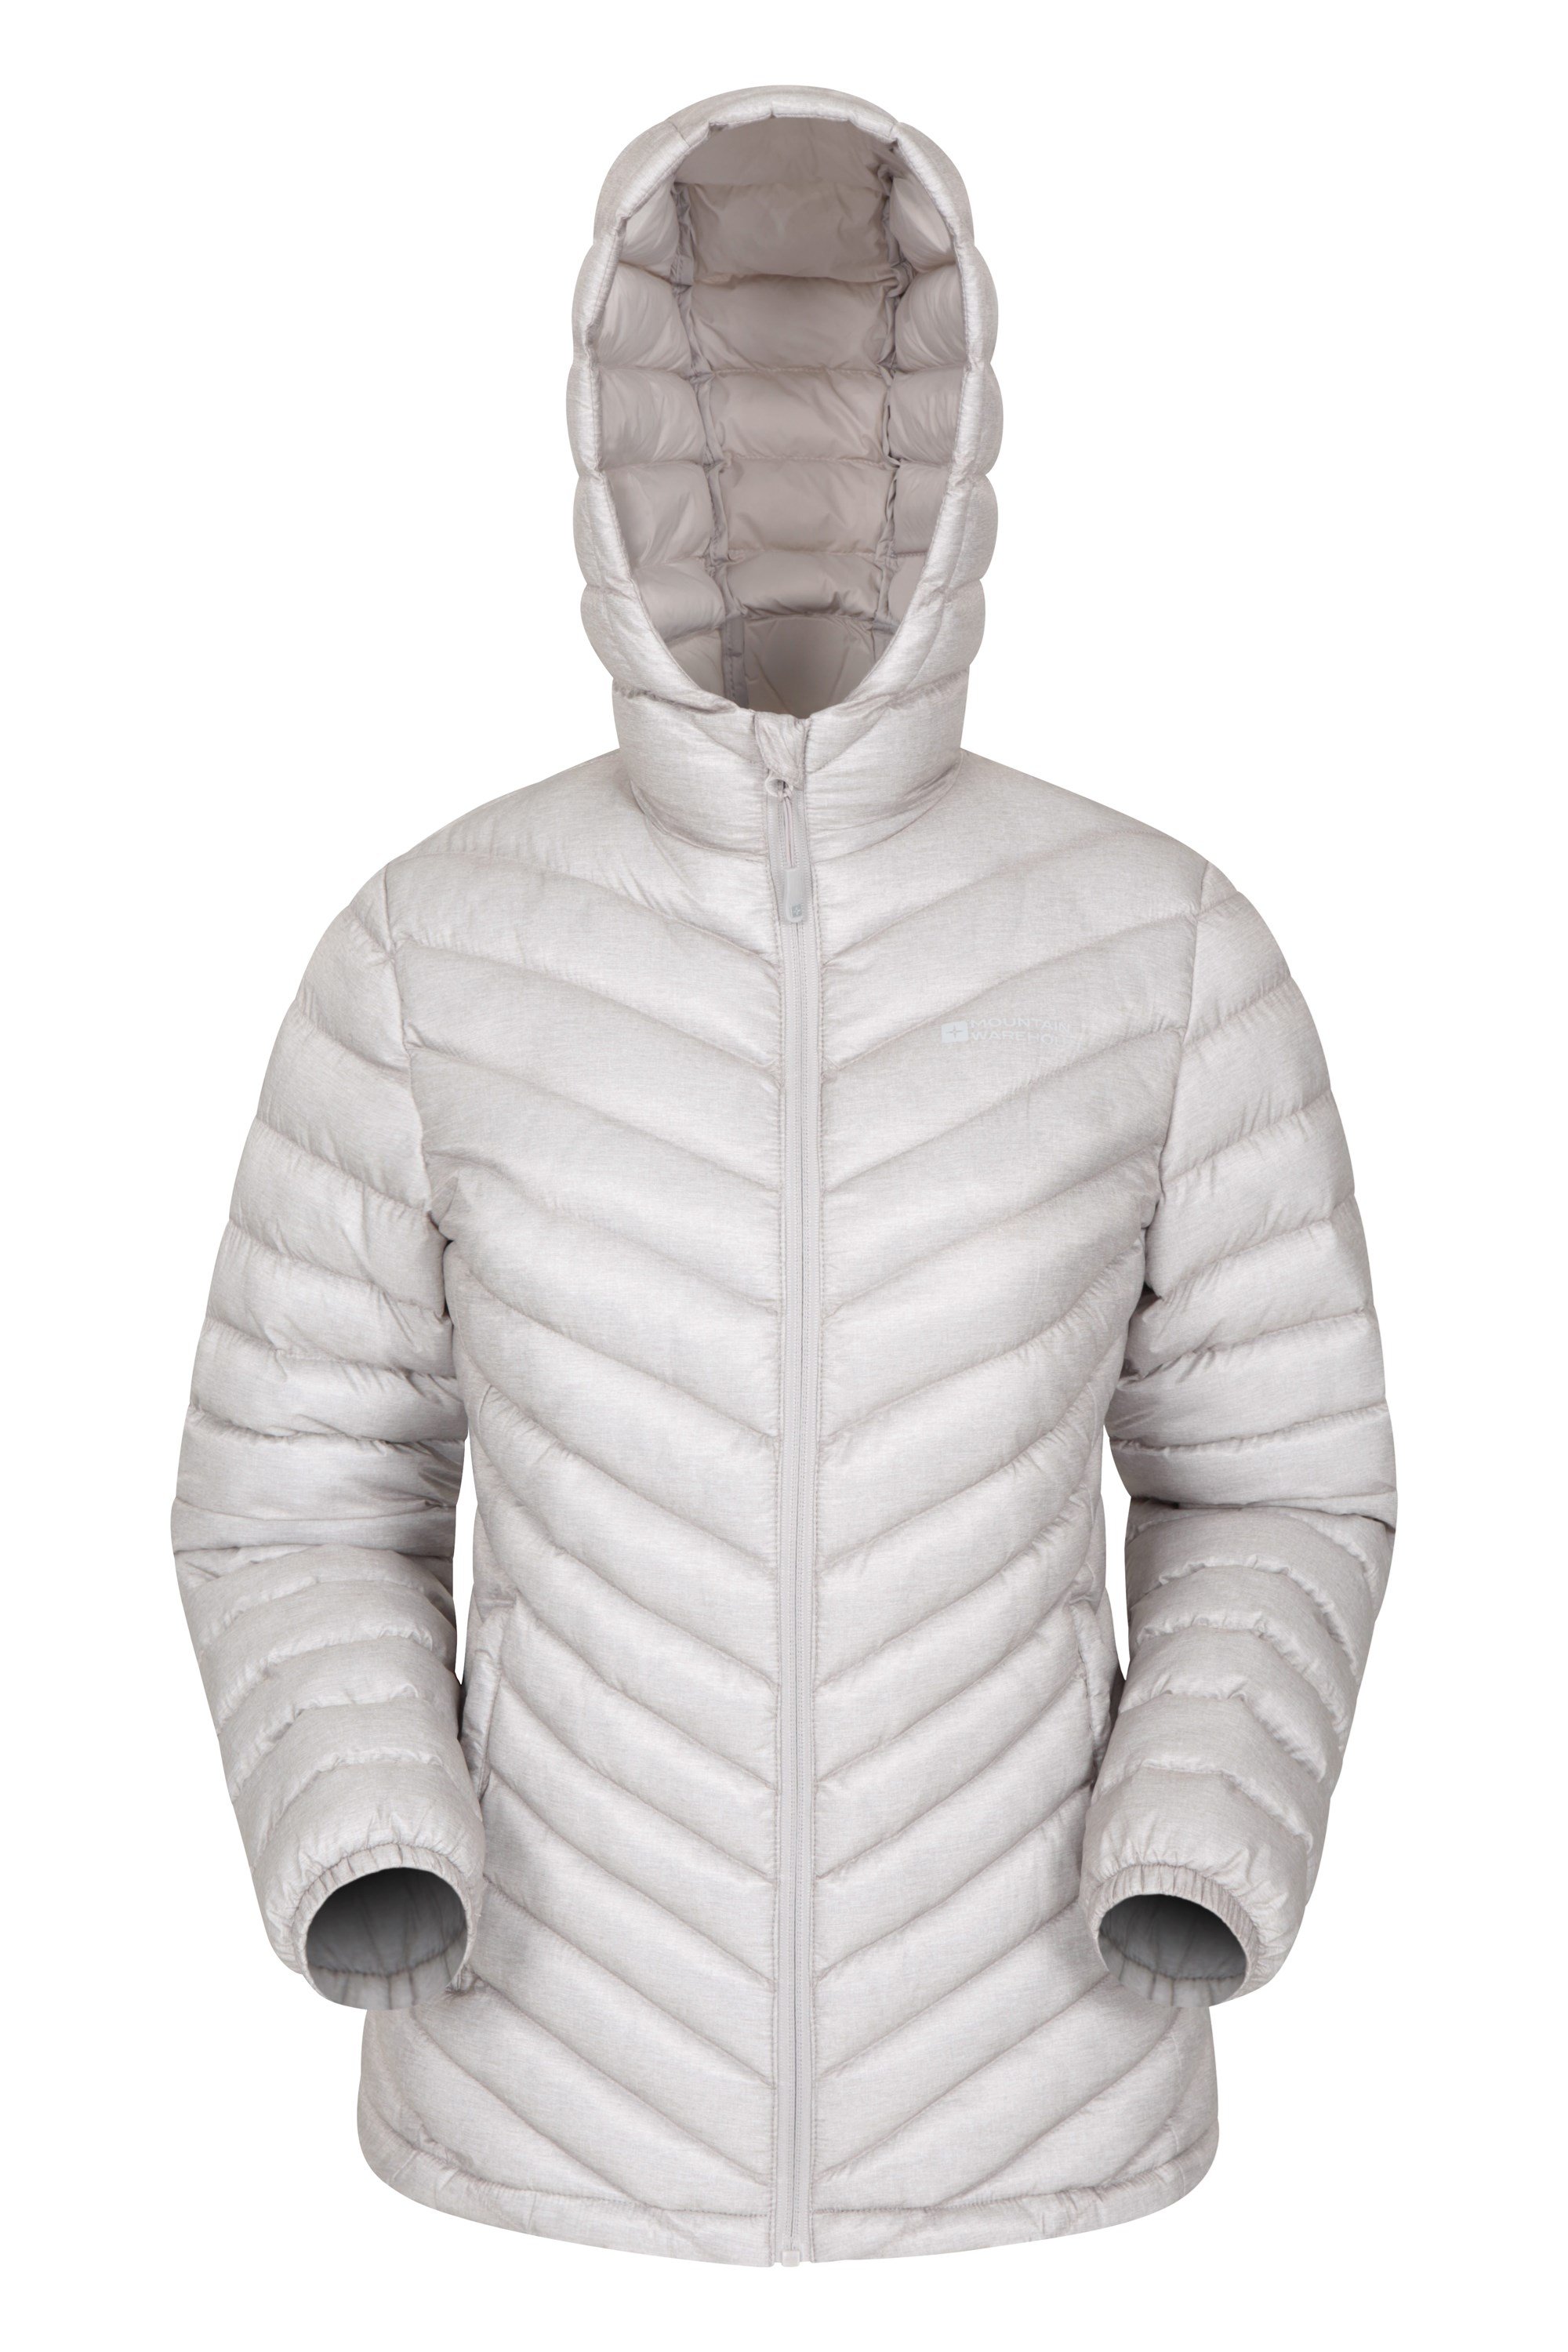 Mountain Warehouse Seasons Reflective Padded Womens Jacket Microfibre Insulate 